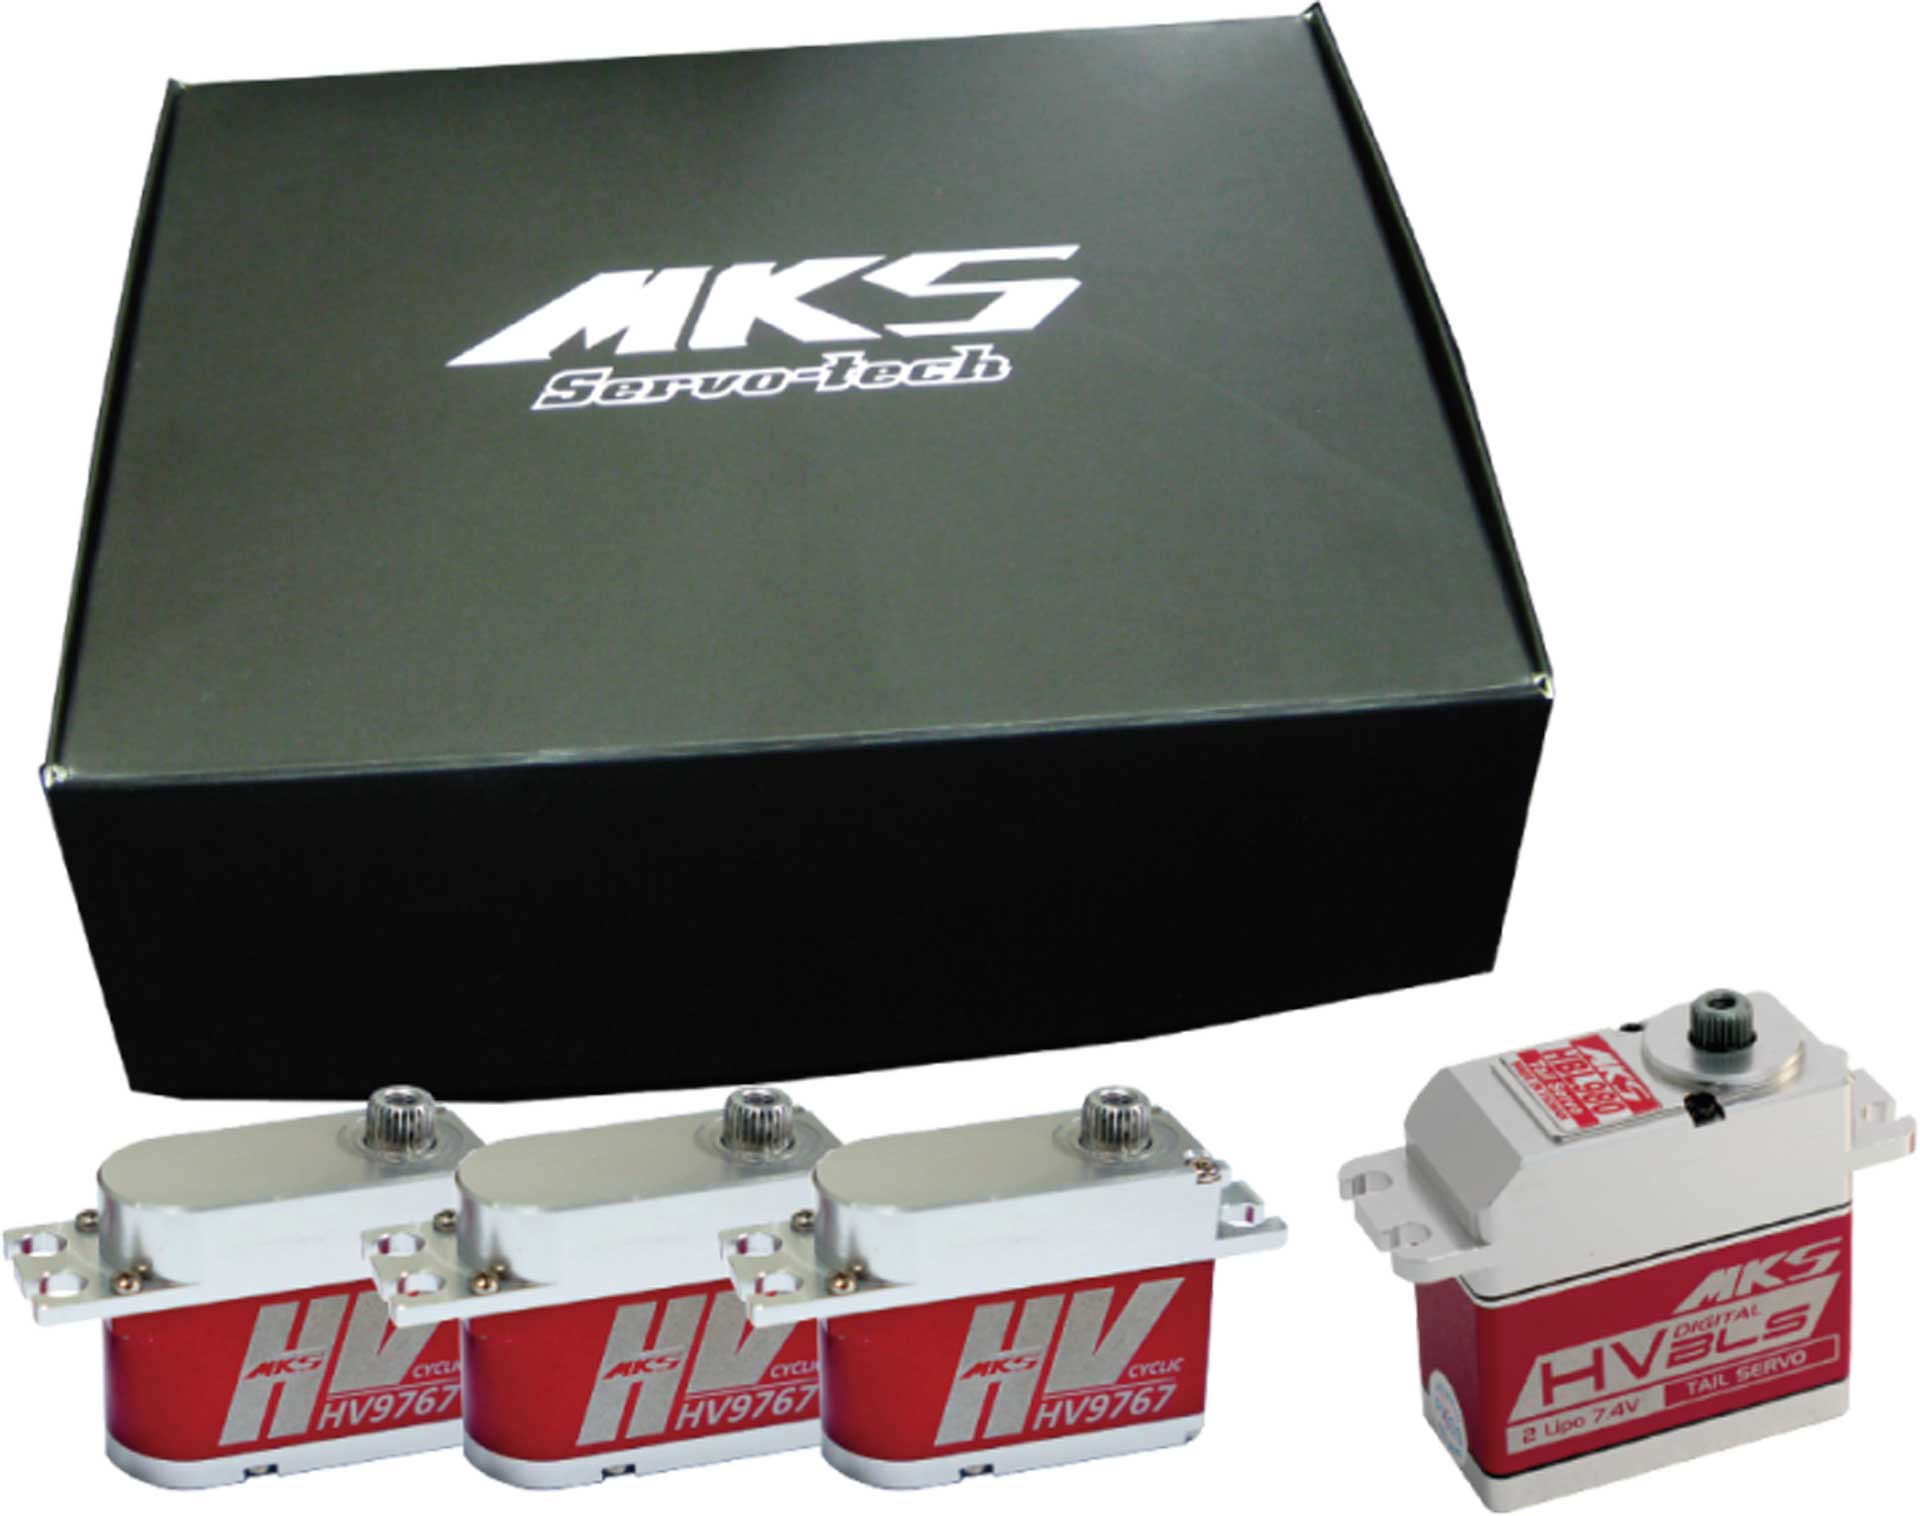 MKS 3x HV9767 et 1x HBL980 HV Digital Servo combo